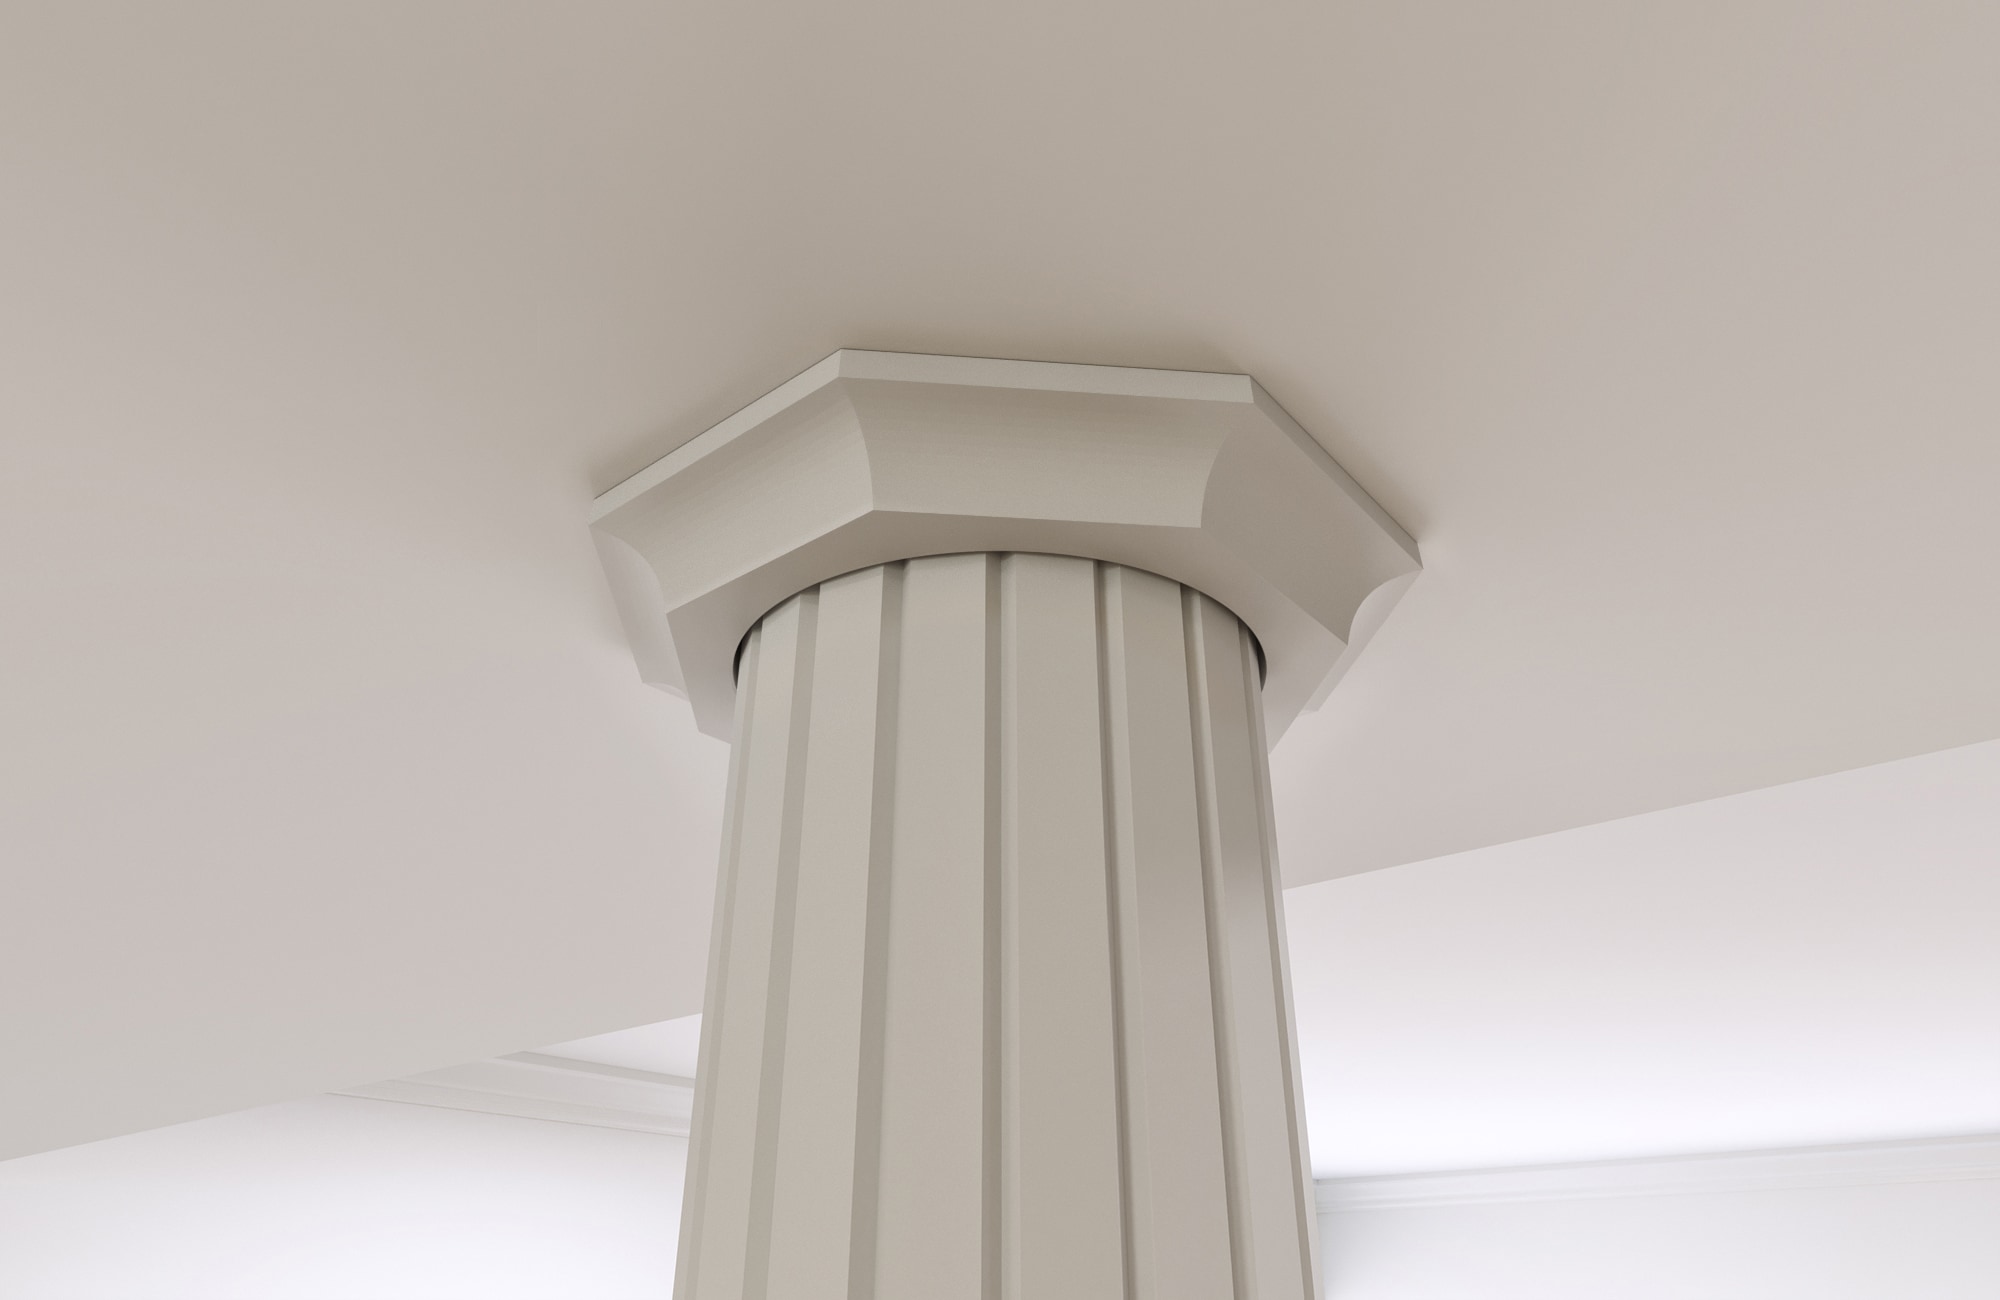 Lally column cover ideas - Pole-Wrap Photo Galleries